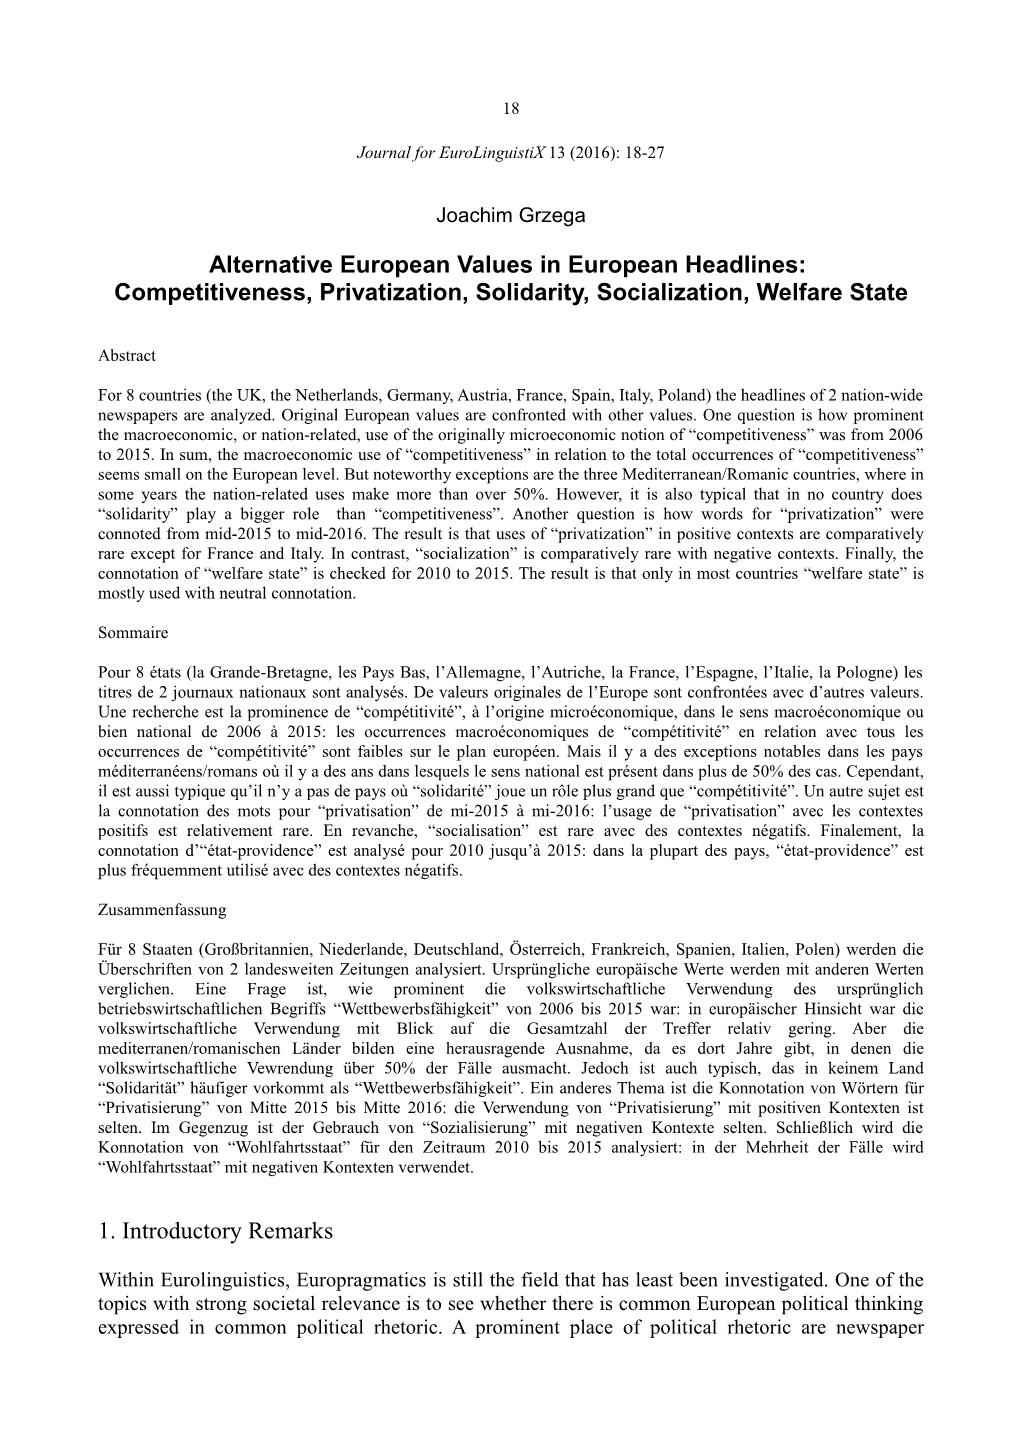 Alternative European Values in European Headlines: Competitiveness, Privatization, Solidarity, Socialization, Welfare State